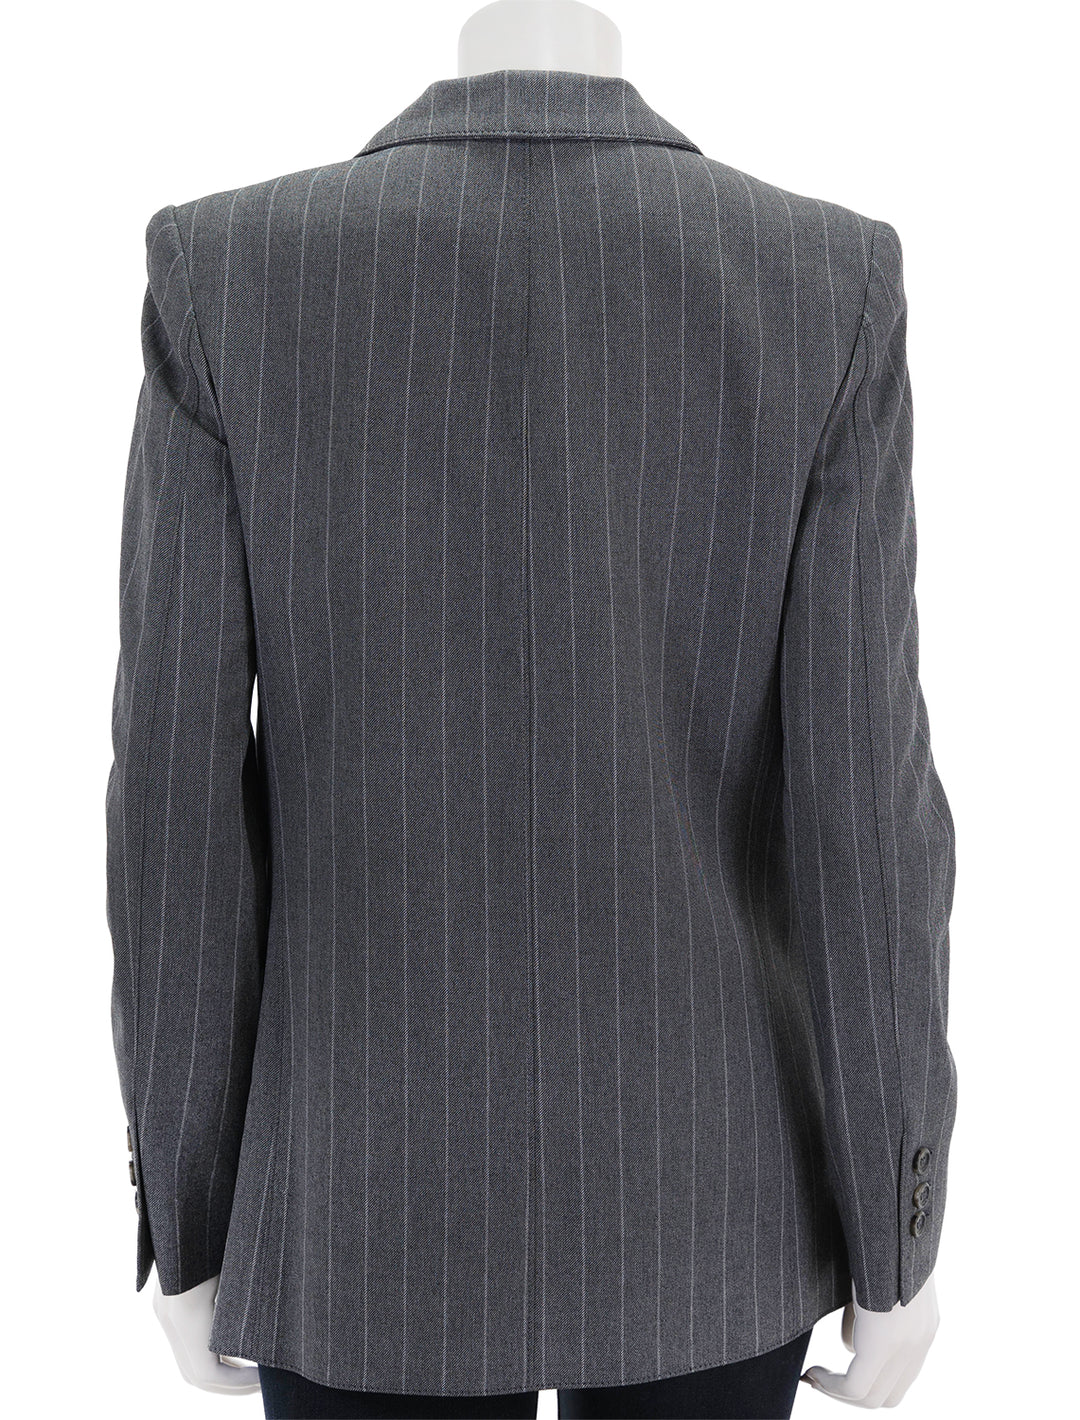 Back view of Smythe's 90's blazer in grey pinstripe.